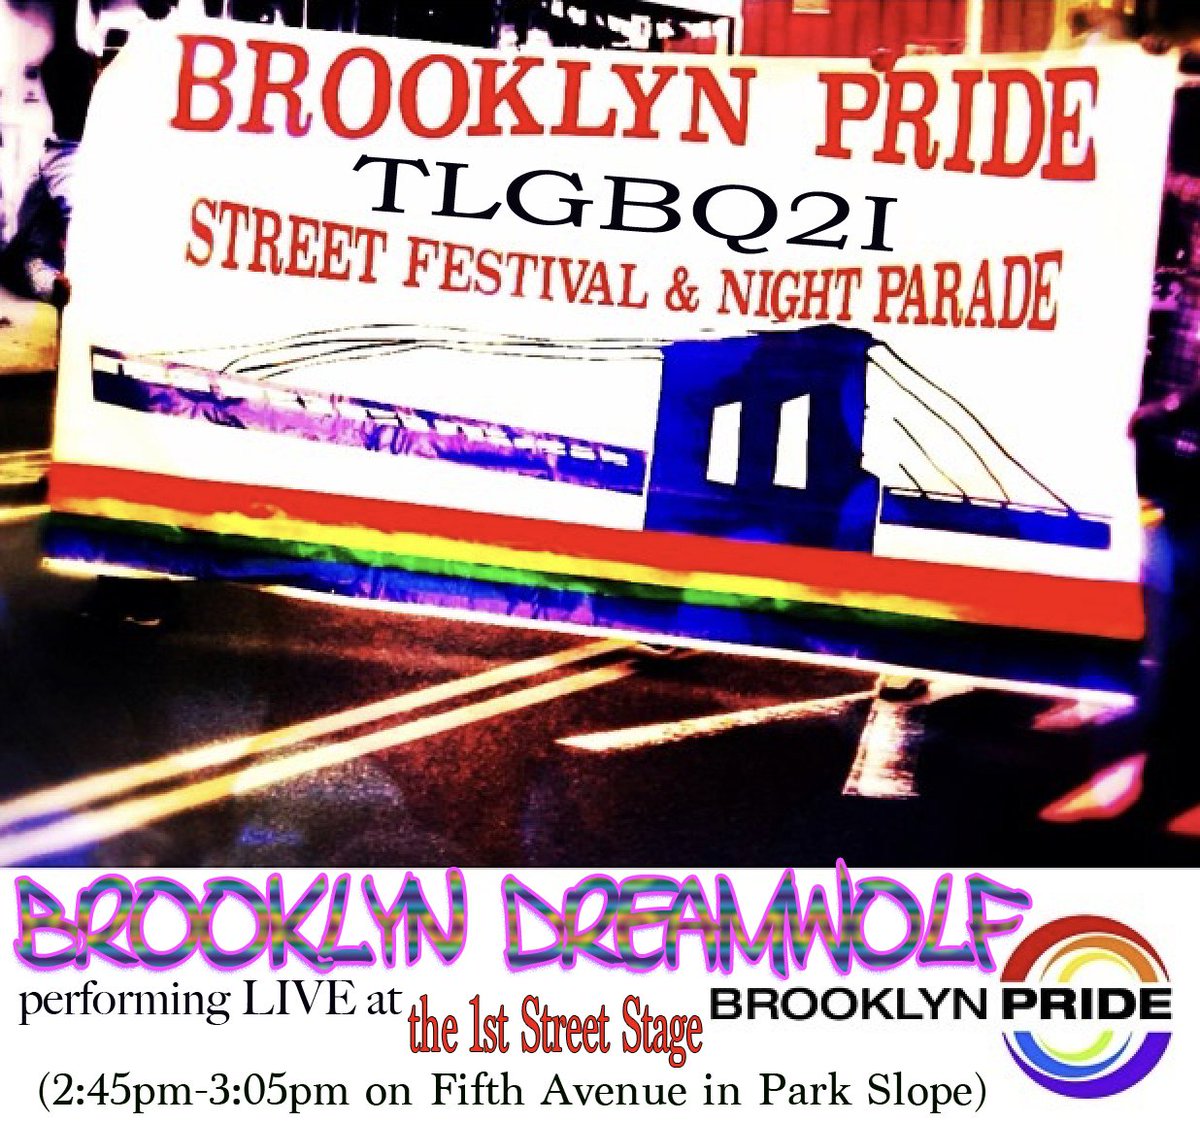 i hit the mic at 2:45pm #BrooklynPride2018 tmw! #Jendog w/ @yalinidream as #BrooklynDreamwolf (on 1st St. Stage/5th Ave) in Park Slope #Brooklyn. #queerHipHop #BushwickHipHop #BushwickArtist #gayHipHop #DopeMC #TwoSpirit #LGBTQI #AlliesWelcomed #QPOCHipHop #QPOC @awQwardtalent